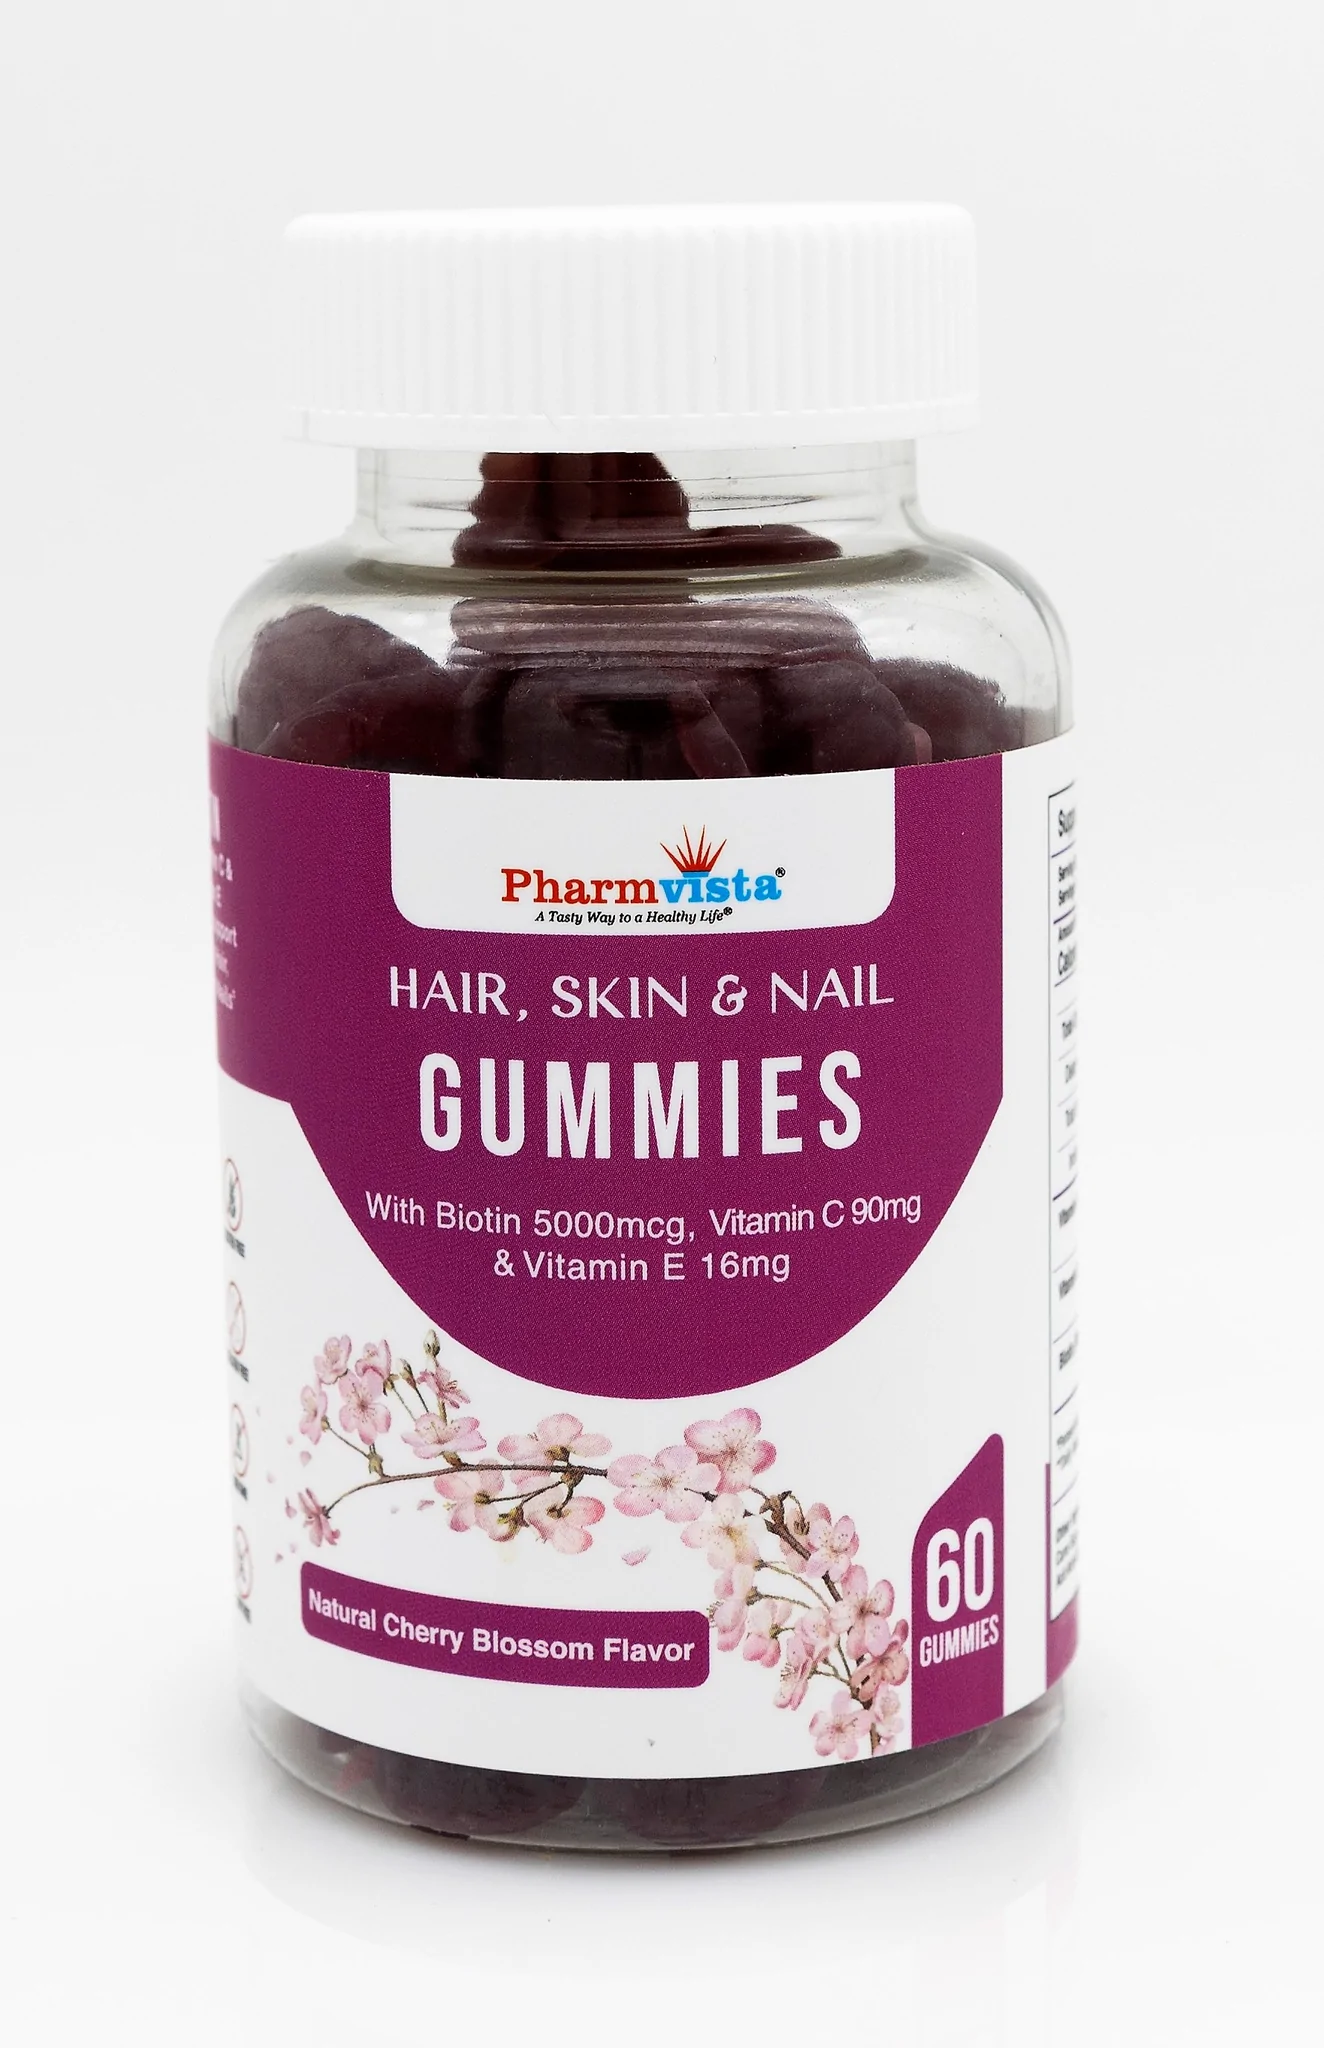 Nature's Bounty Hair, Skin and Nails Gummies Review | Regina Ramos - YouTube